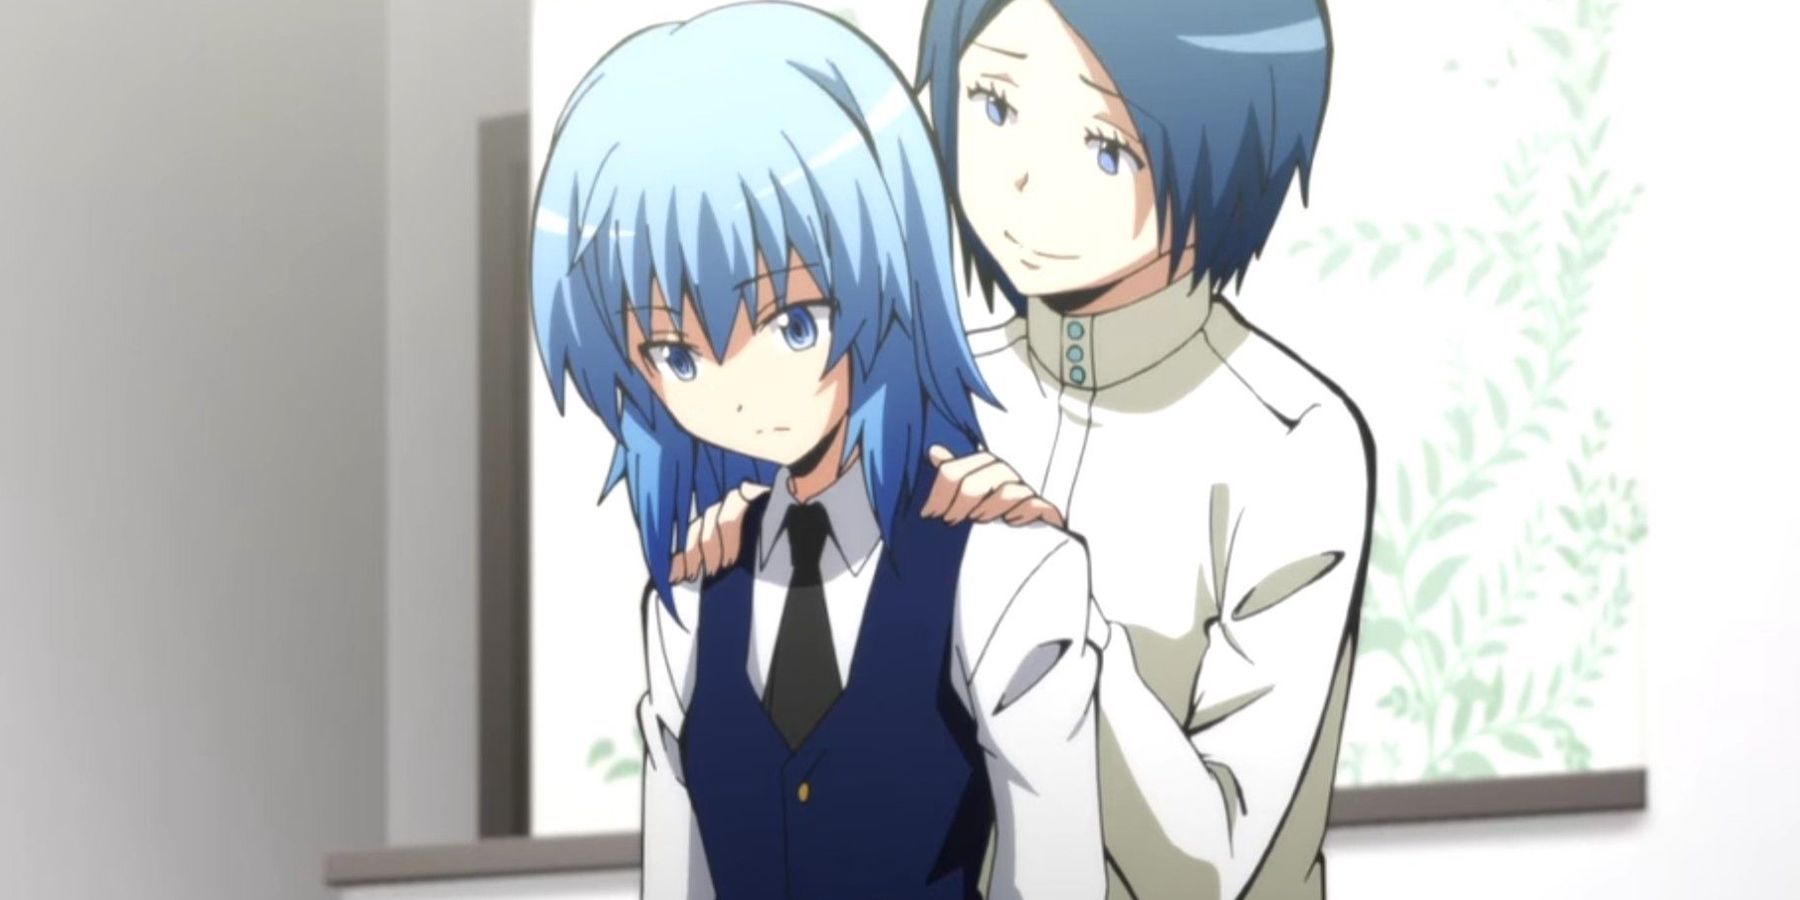 Nagisa and his mom in Assassination Classroom.